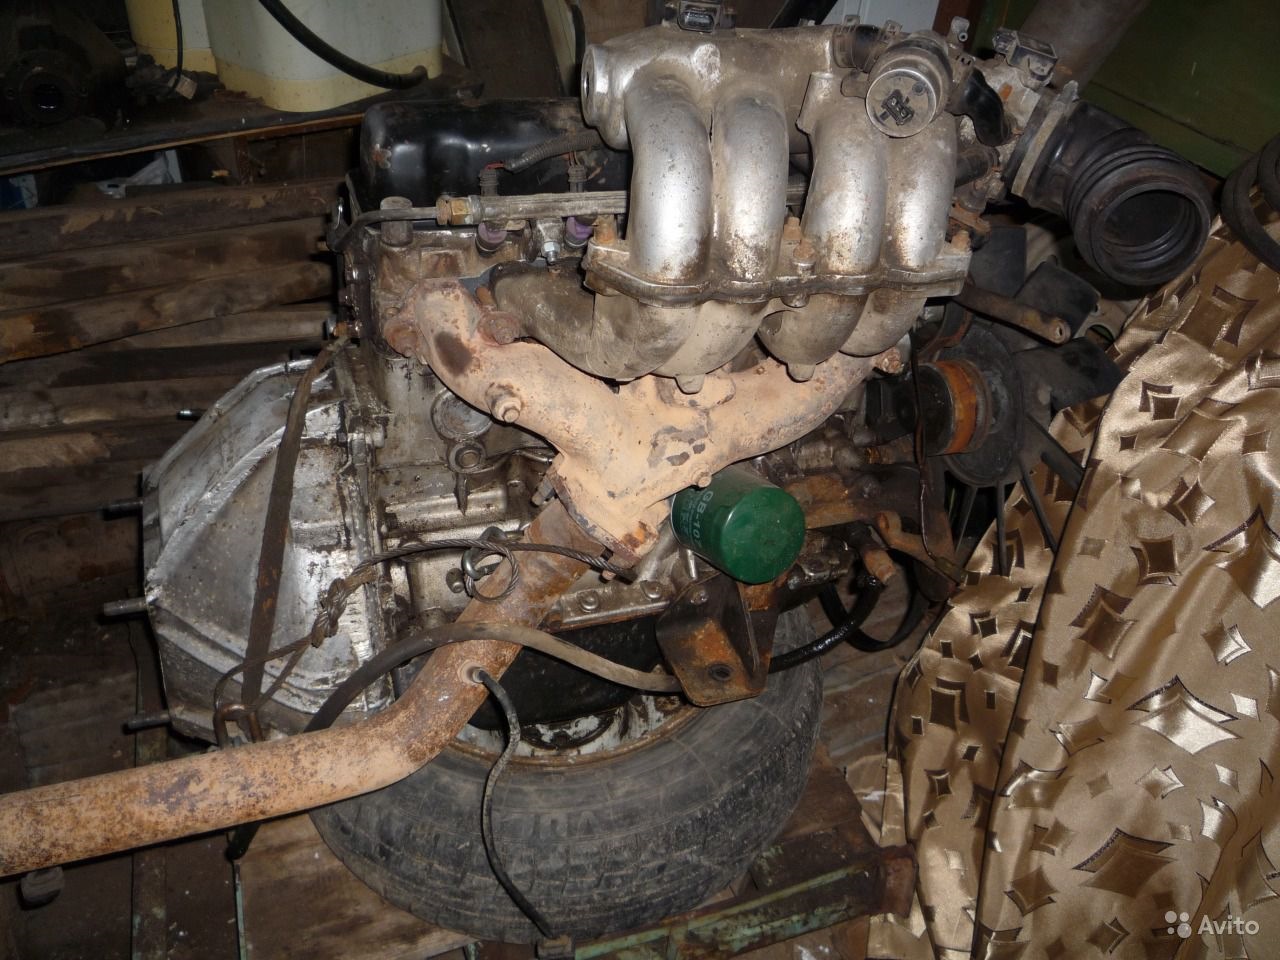 Двигатель 4216 б у. УМЗ 4216 на УАЗ. 4216 Двигатель УАЗ инжектор. Двигатель УМЗ 4216 на УАЗ. УАЗ 469 мотор 4216.